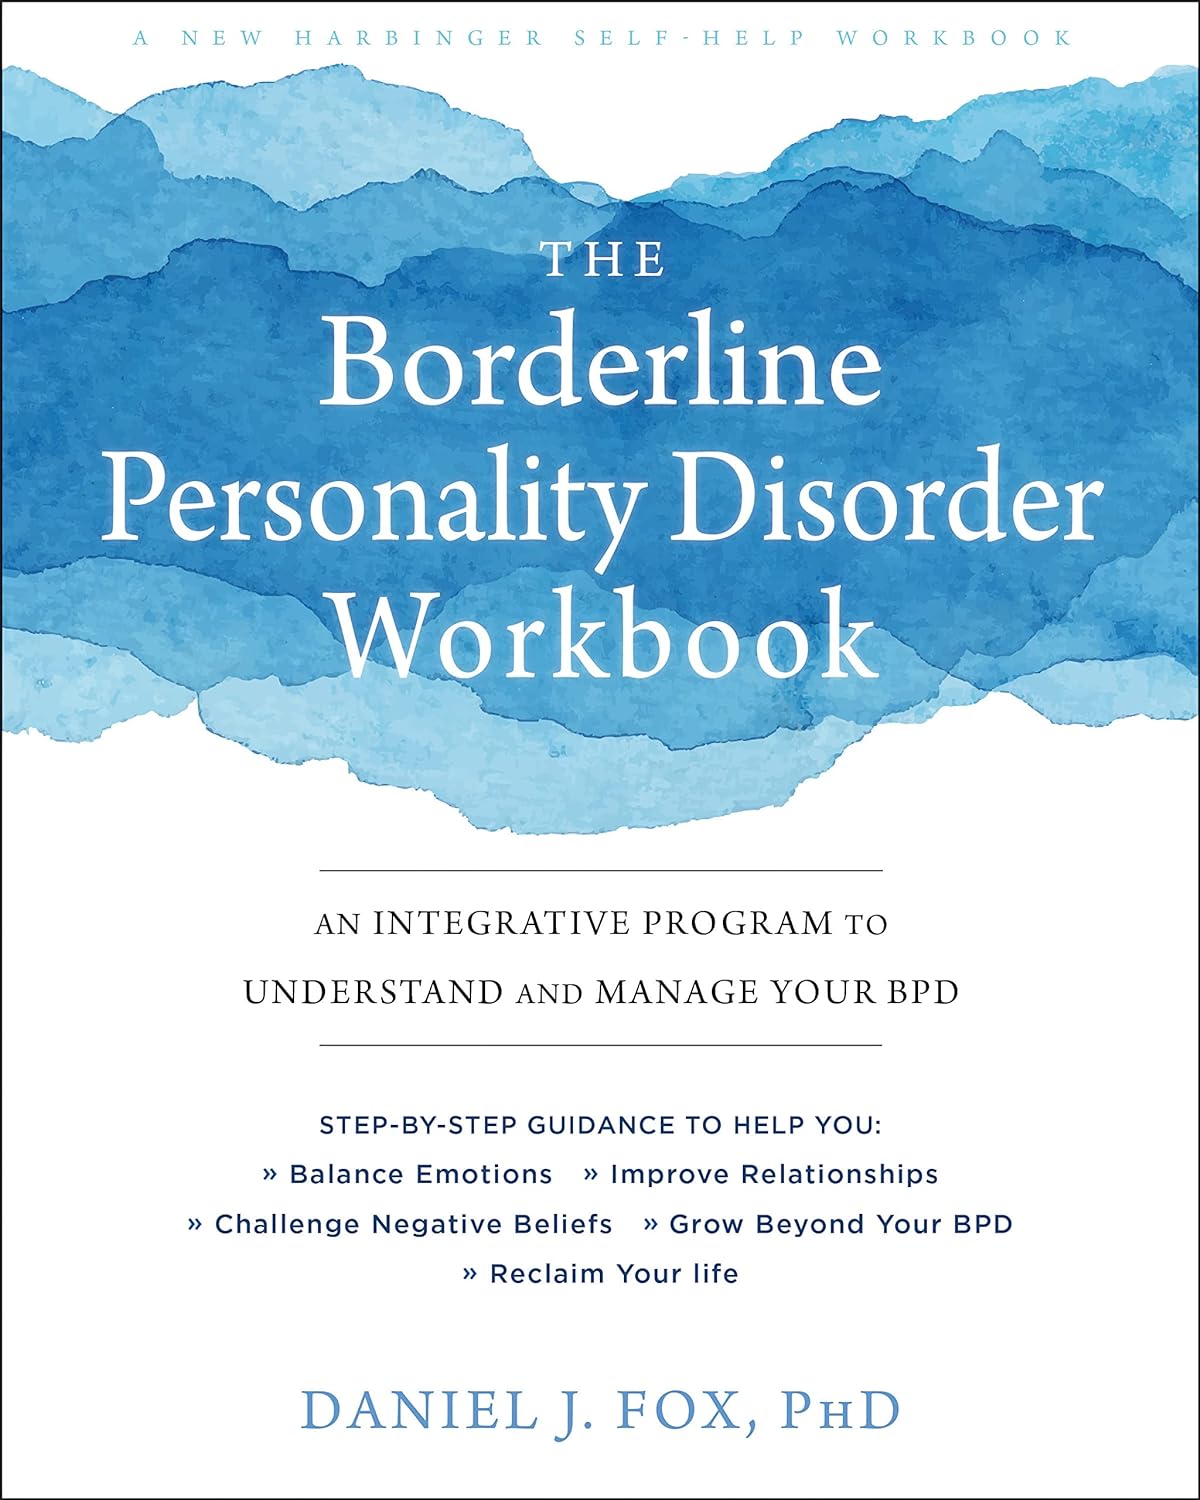 The Borderline Personality Disorder Workbook By Daniel J. Fox PhD